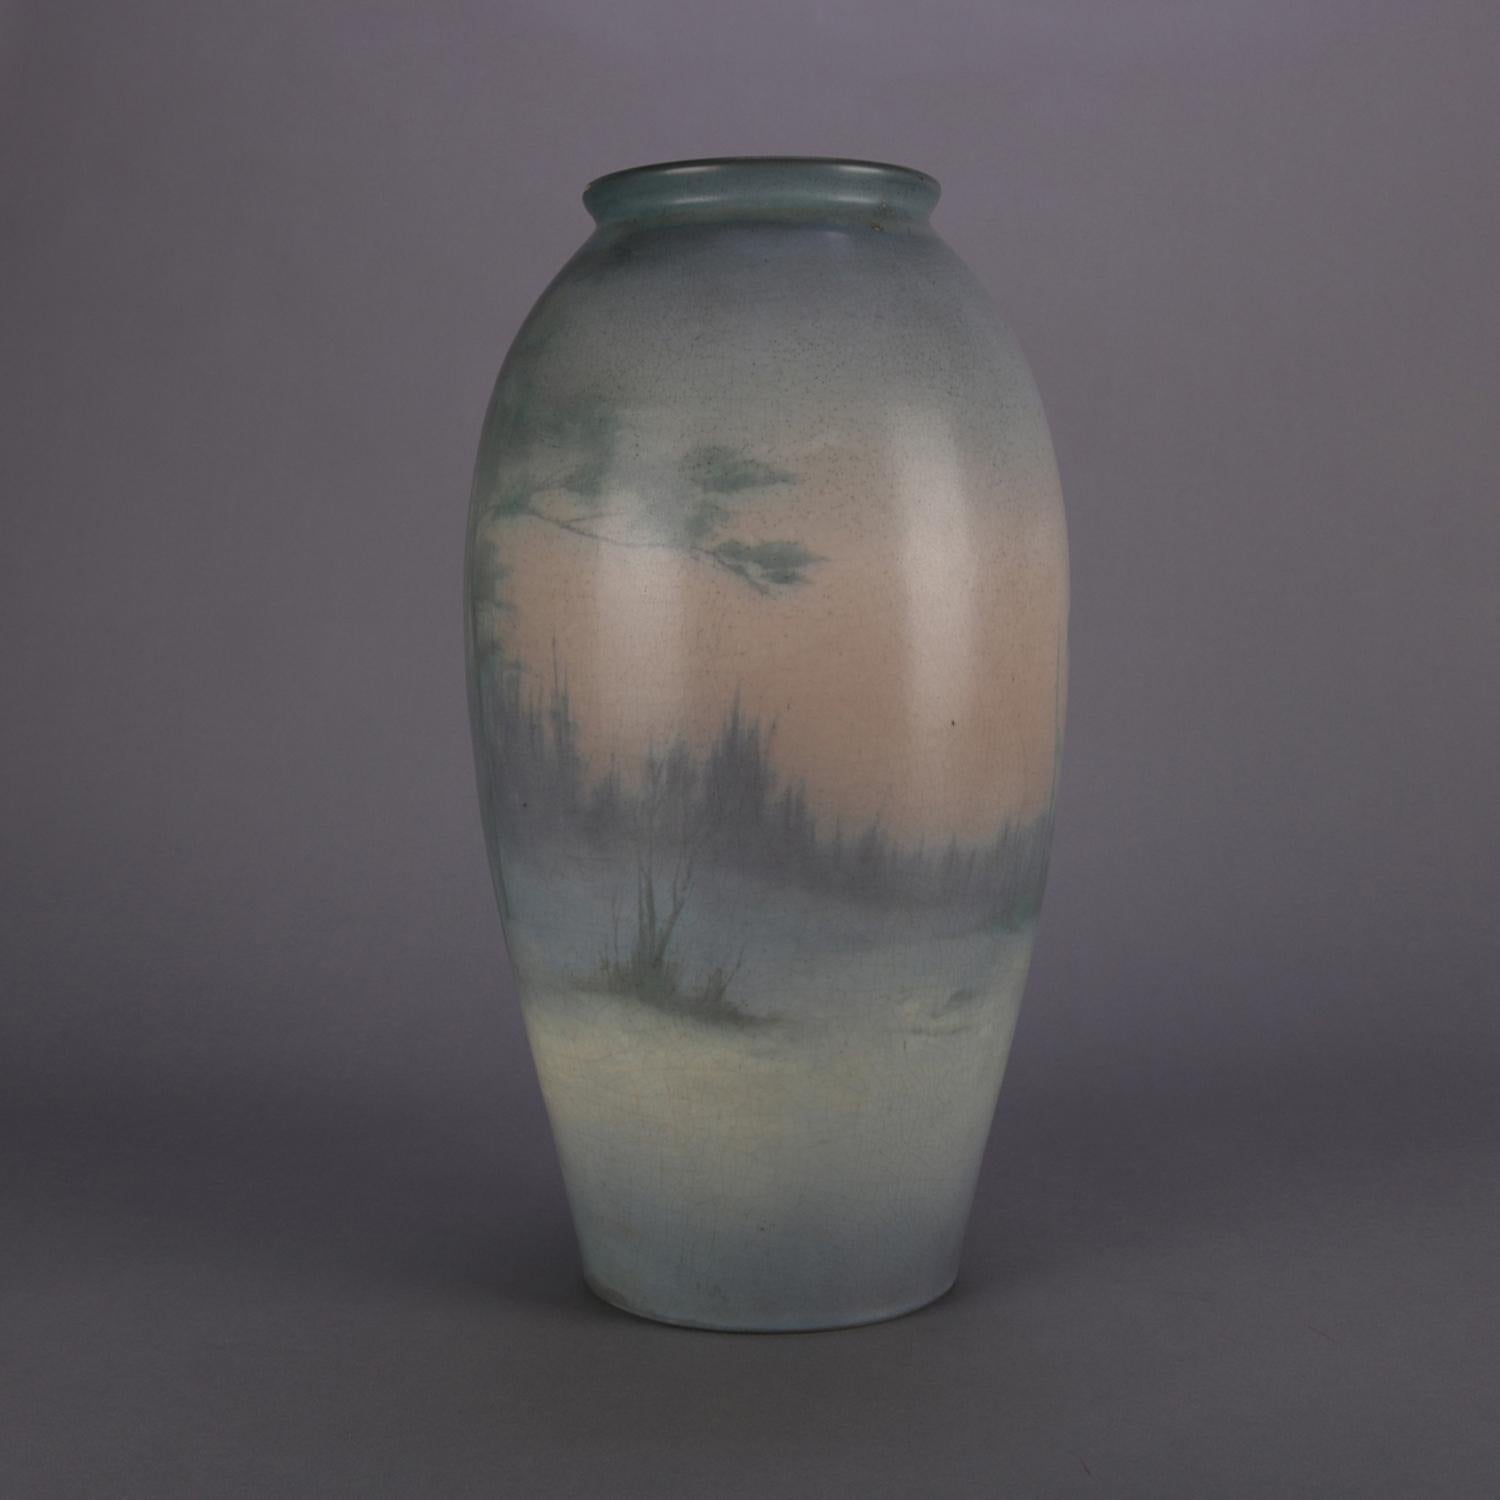 Antique oversized art pottery vase by Rookwood features hand-painted forest landscape scene beneath velum glaze, signed on base, c1916

Measures: 16